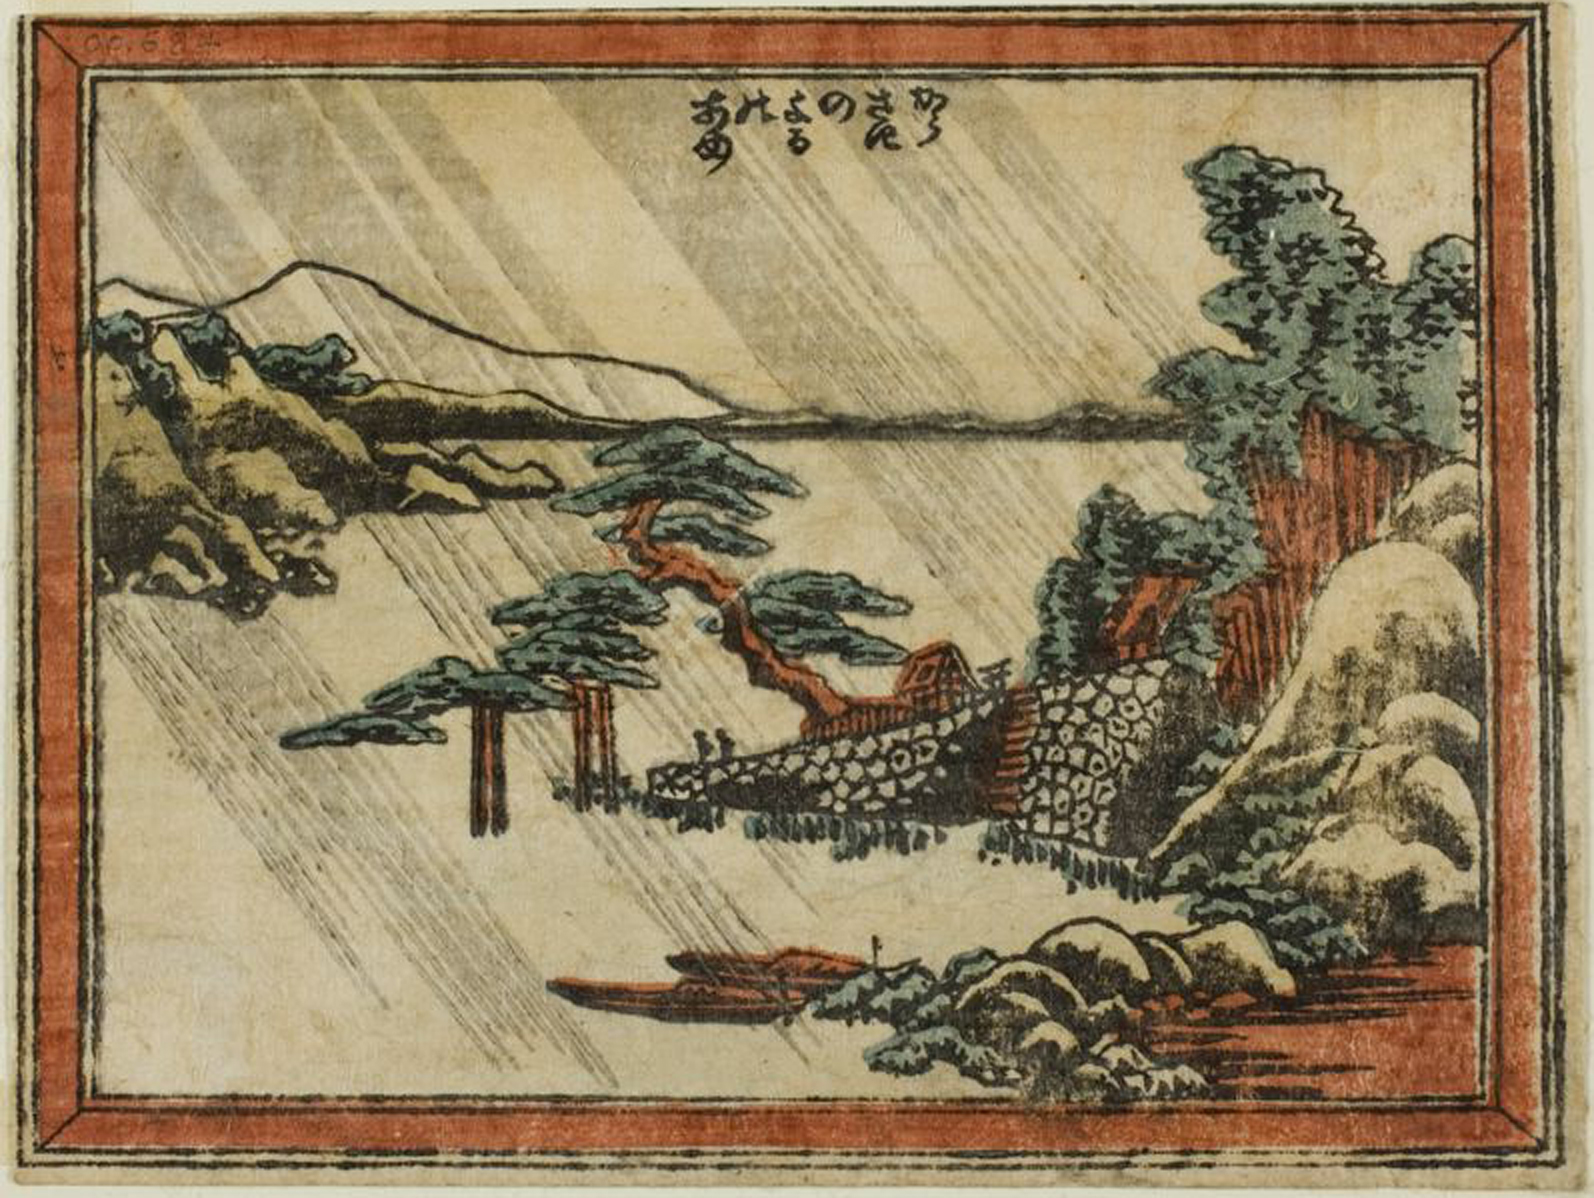 Hokusai - Night Rain at Karasaki - 1804 Edition